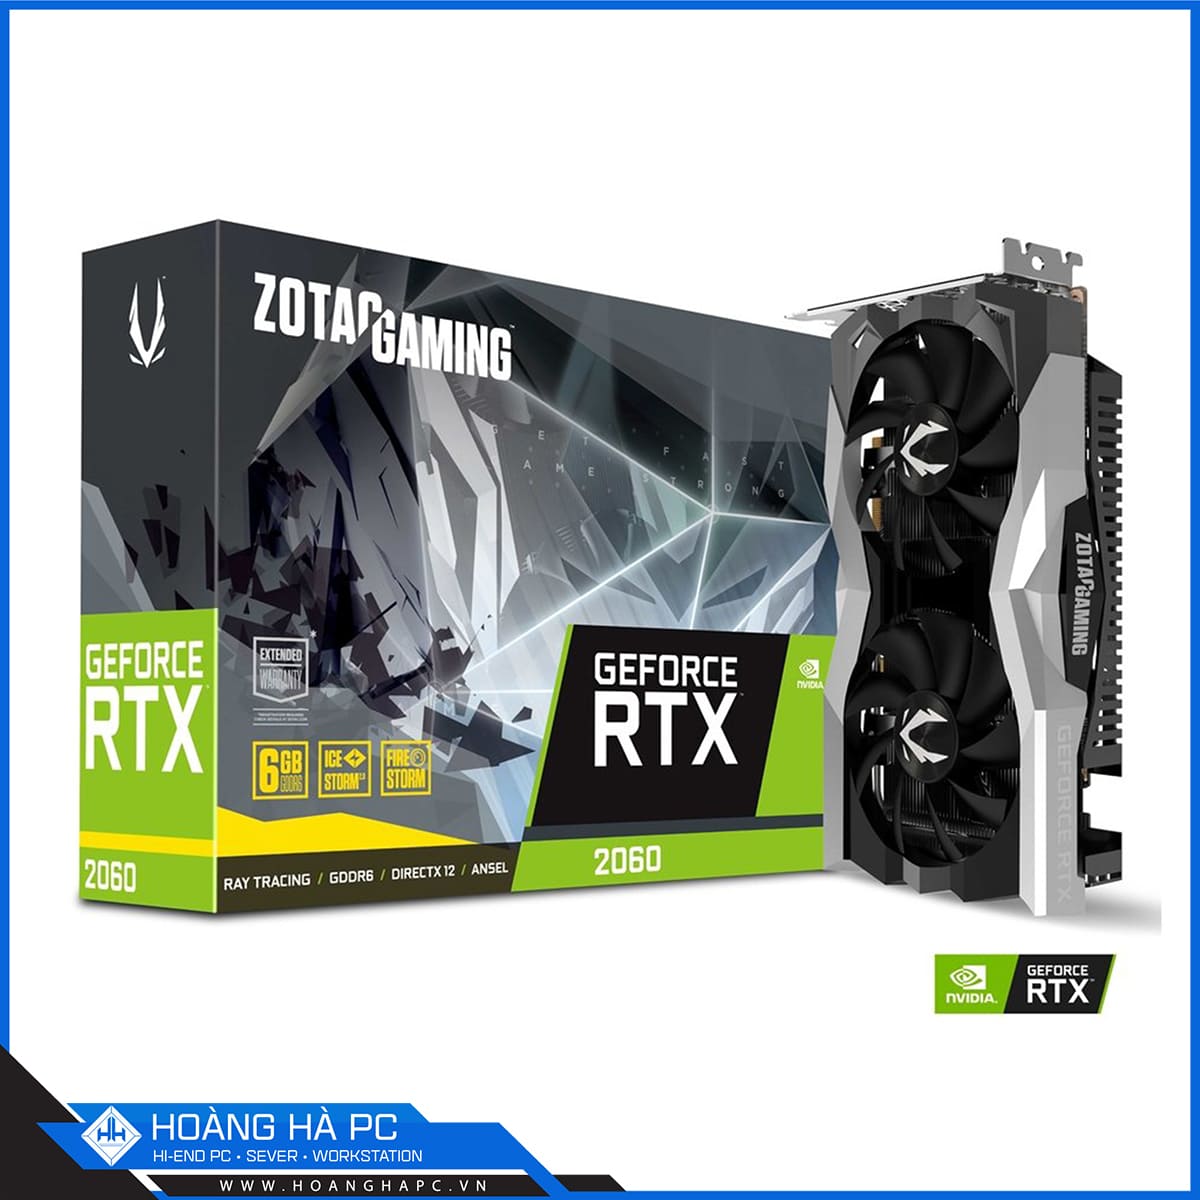 ZOTAC GAMING GeForce RTX 2060 Twin Fan 6GB